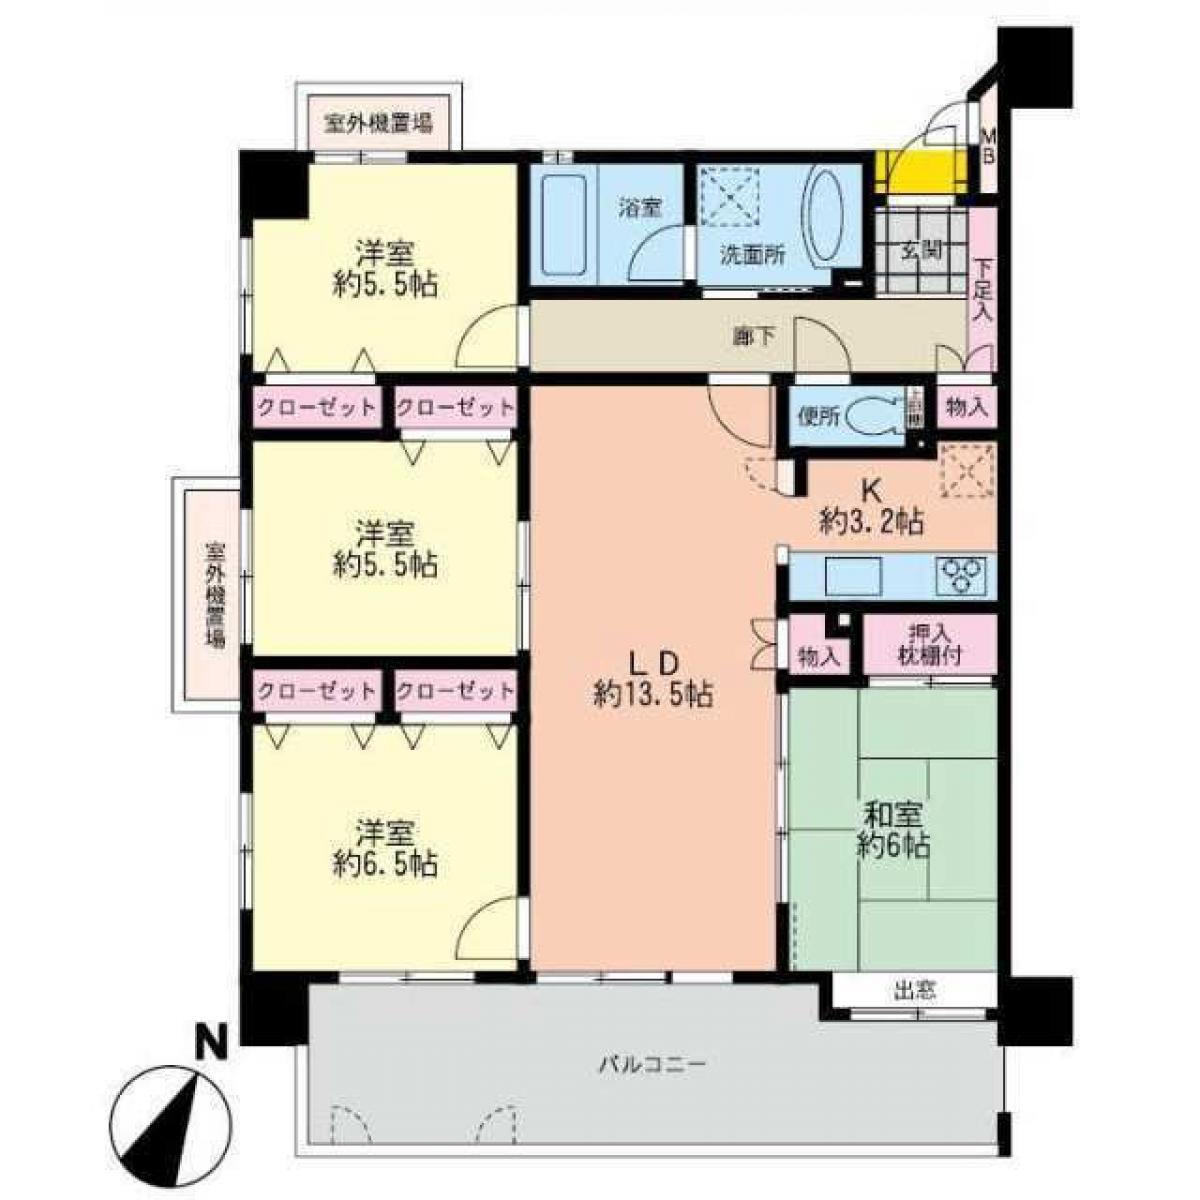 Picture of Apartment For Sale in Dazaifu Shi, Fukuoka, Japan